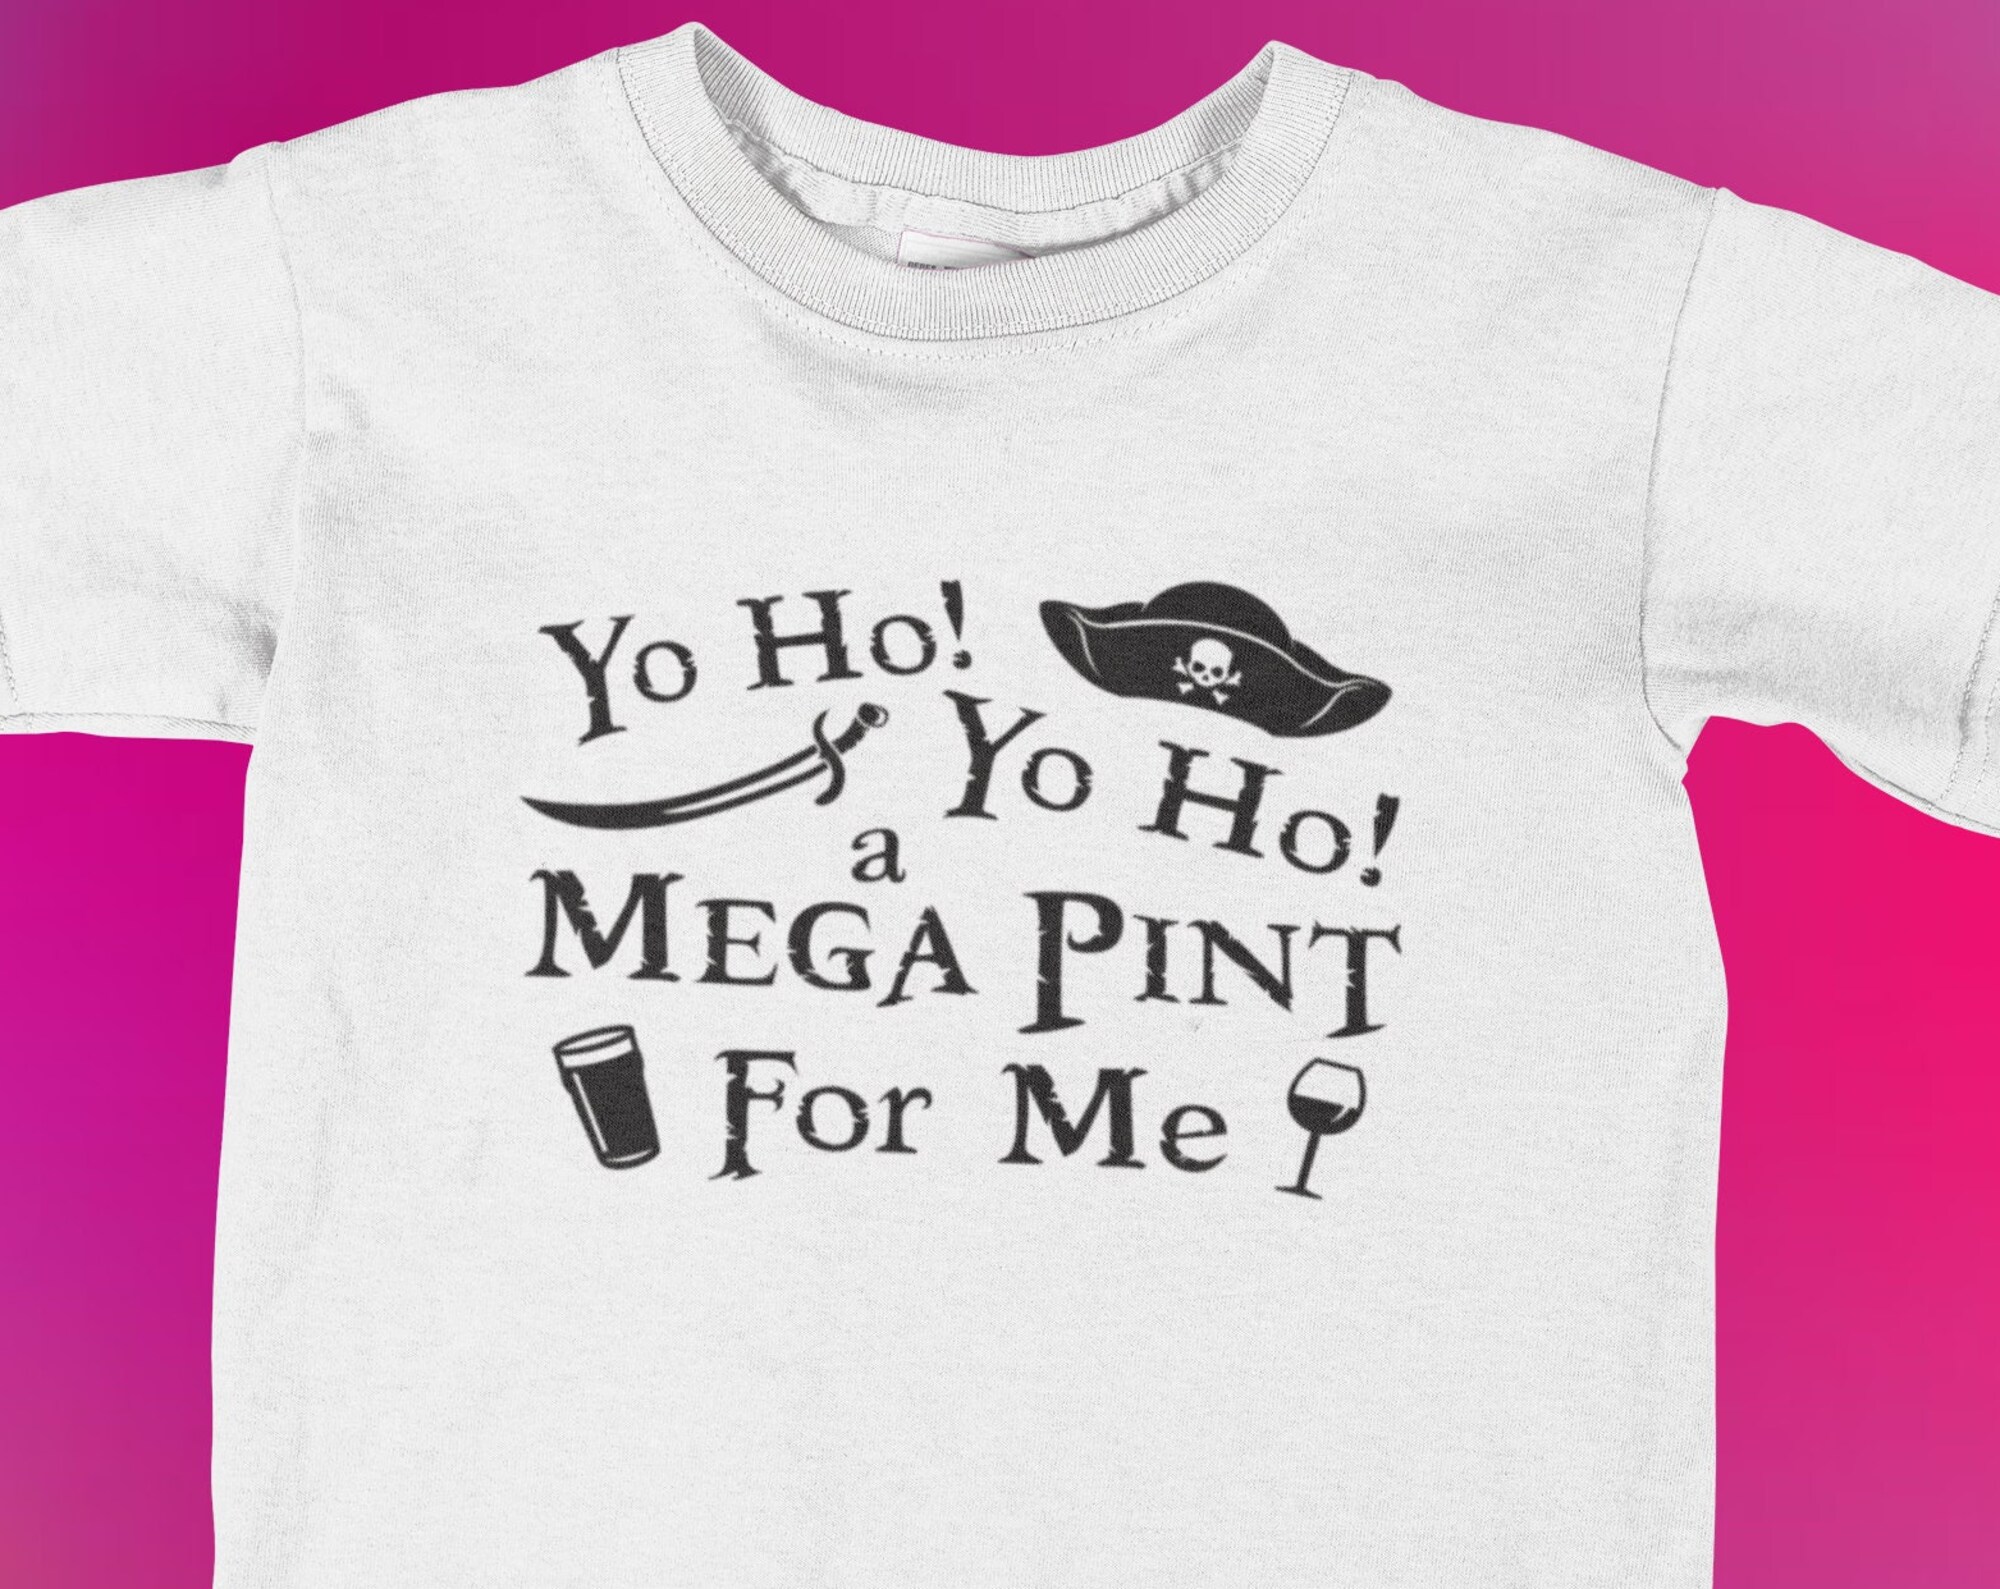 Discover Mega Pint For Me! Mega Pint Shirt, Johnny Depp Tee, Hearsay Brewing, Unisex Adult Clothing, Pirates Life Shirt, Graphic Tees